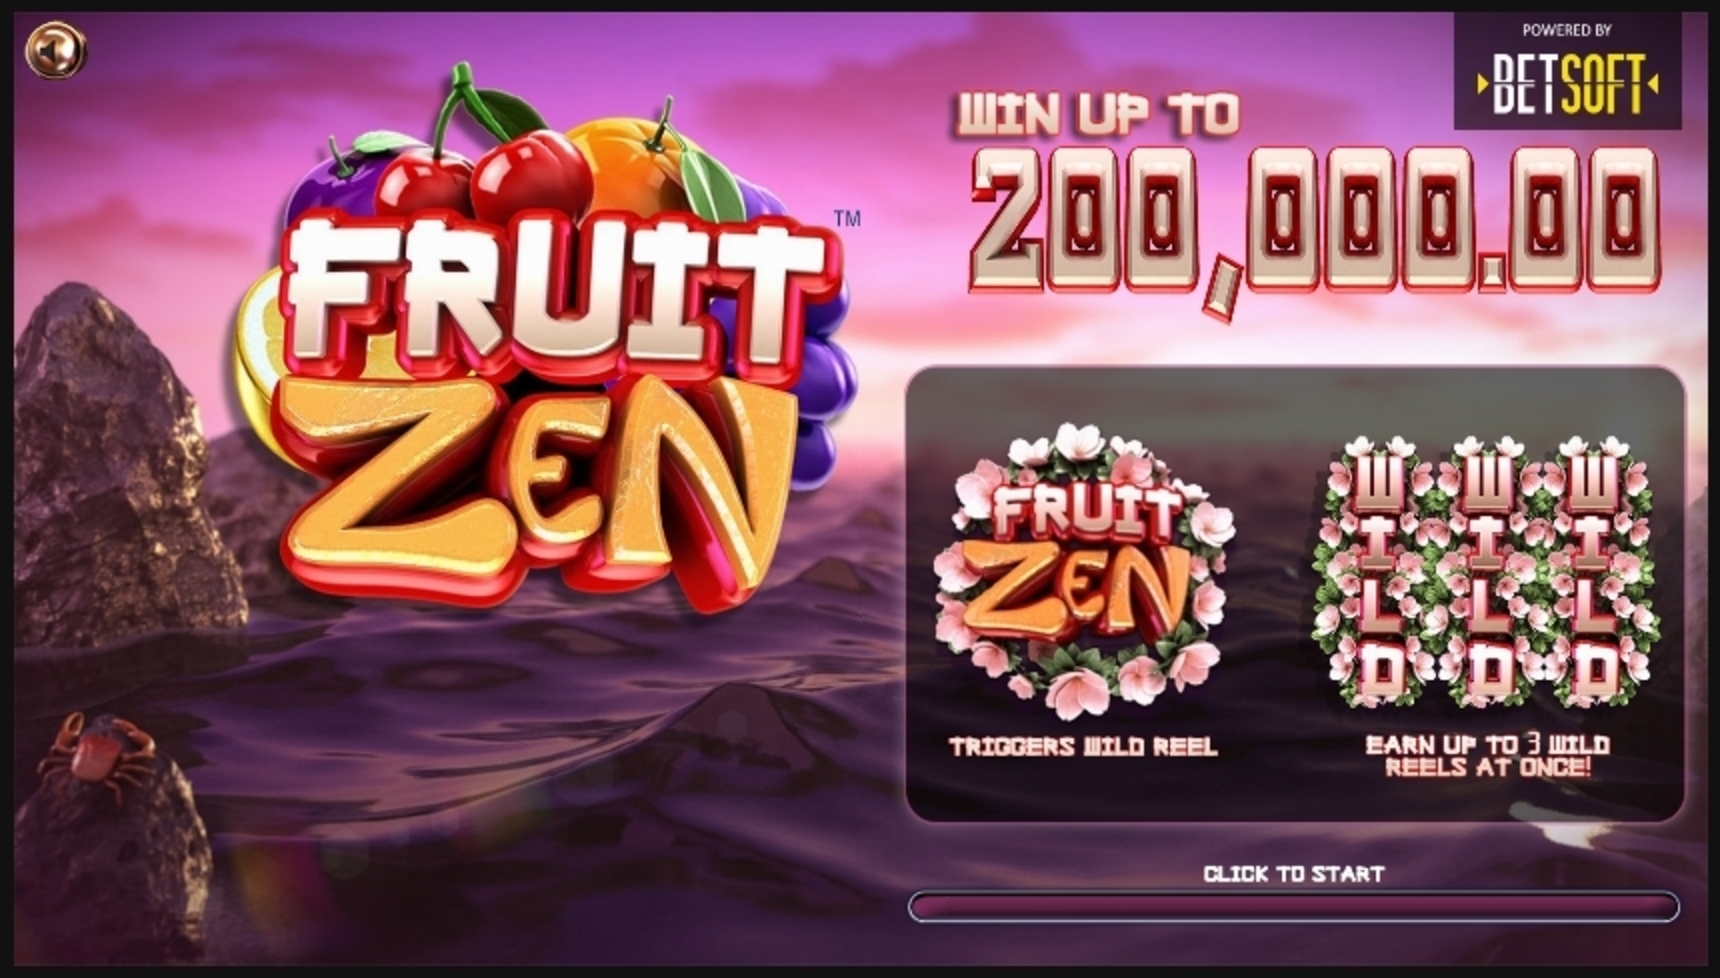 Play Fruit Zen Free Casino Slot Game by Betsoft